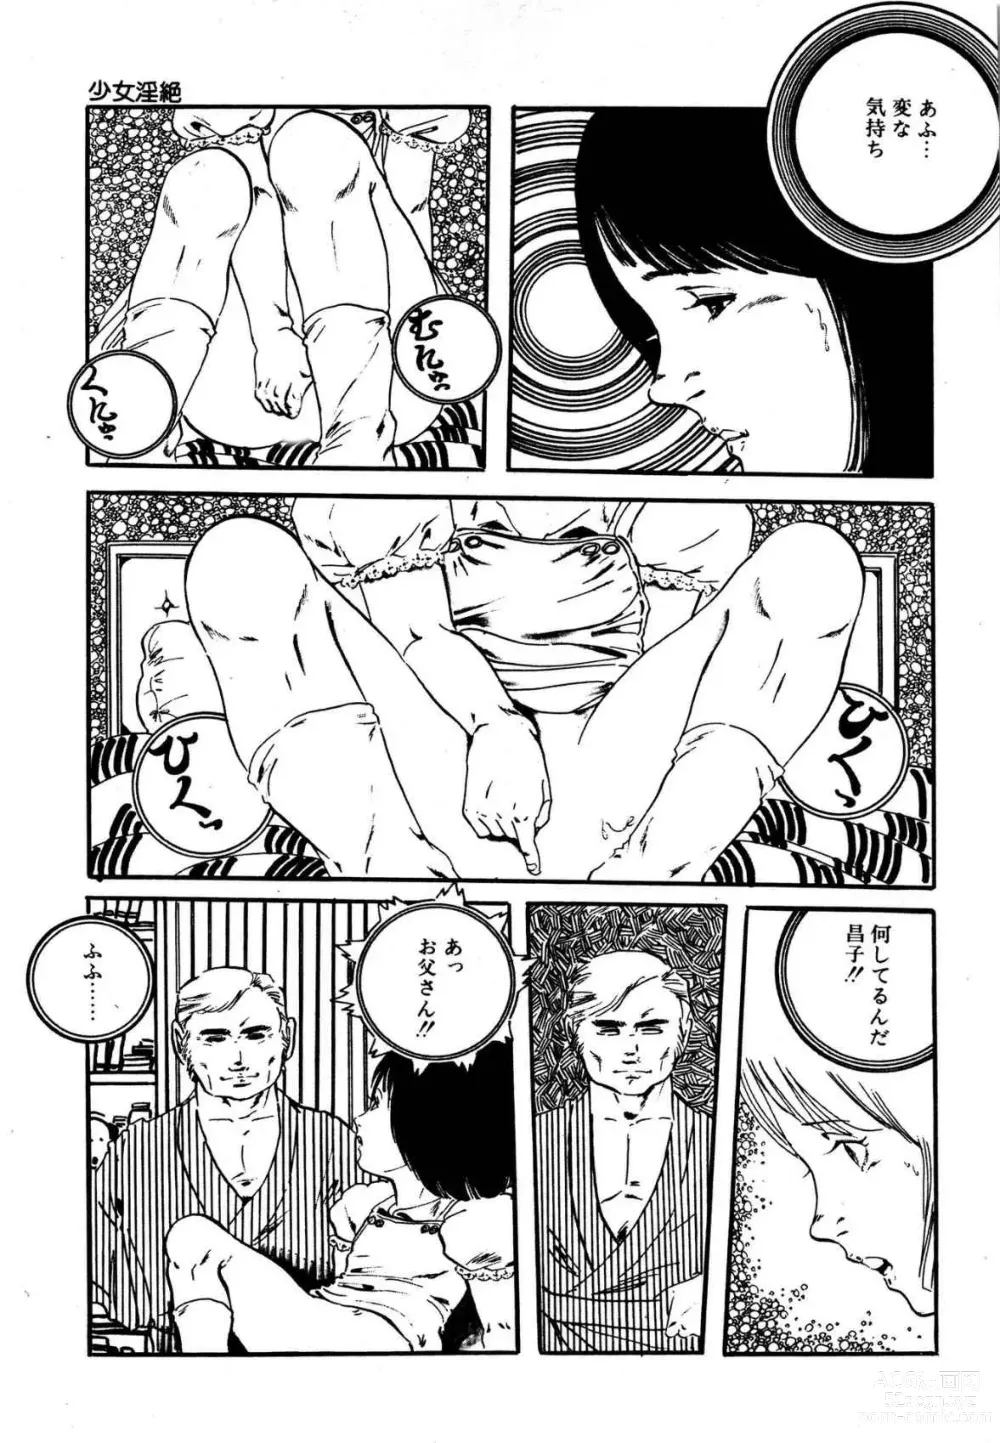 Page 193 of manga Dreaming fairy